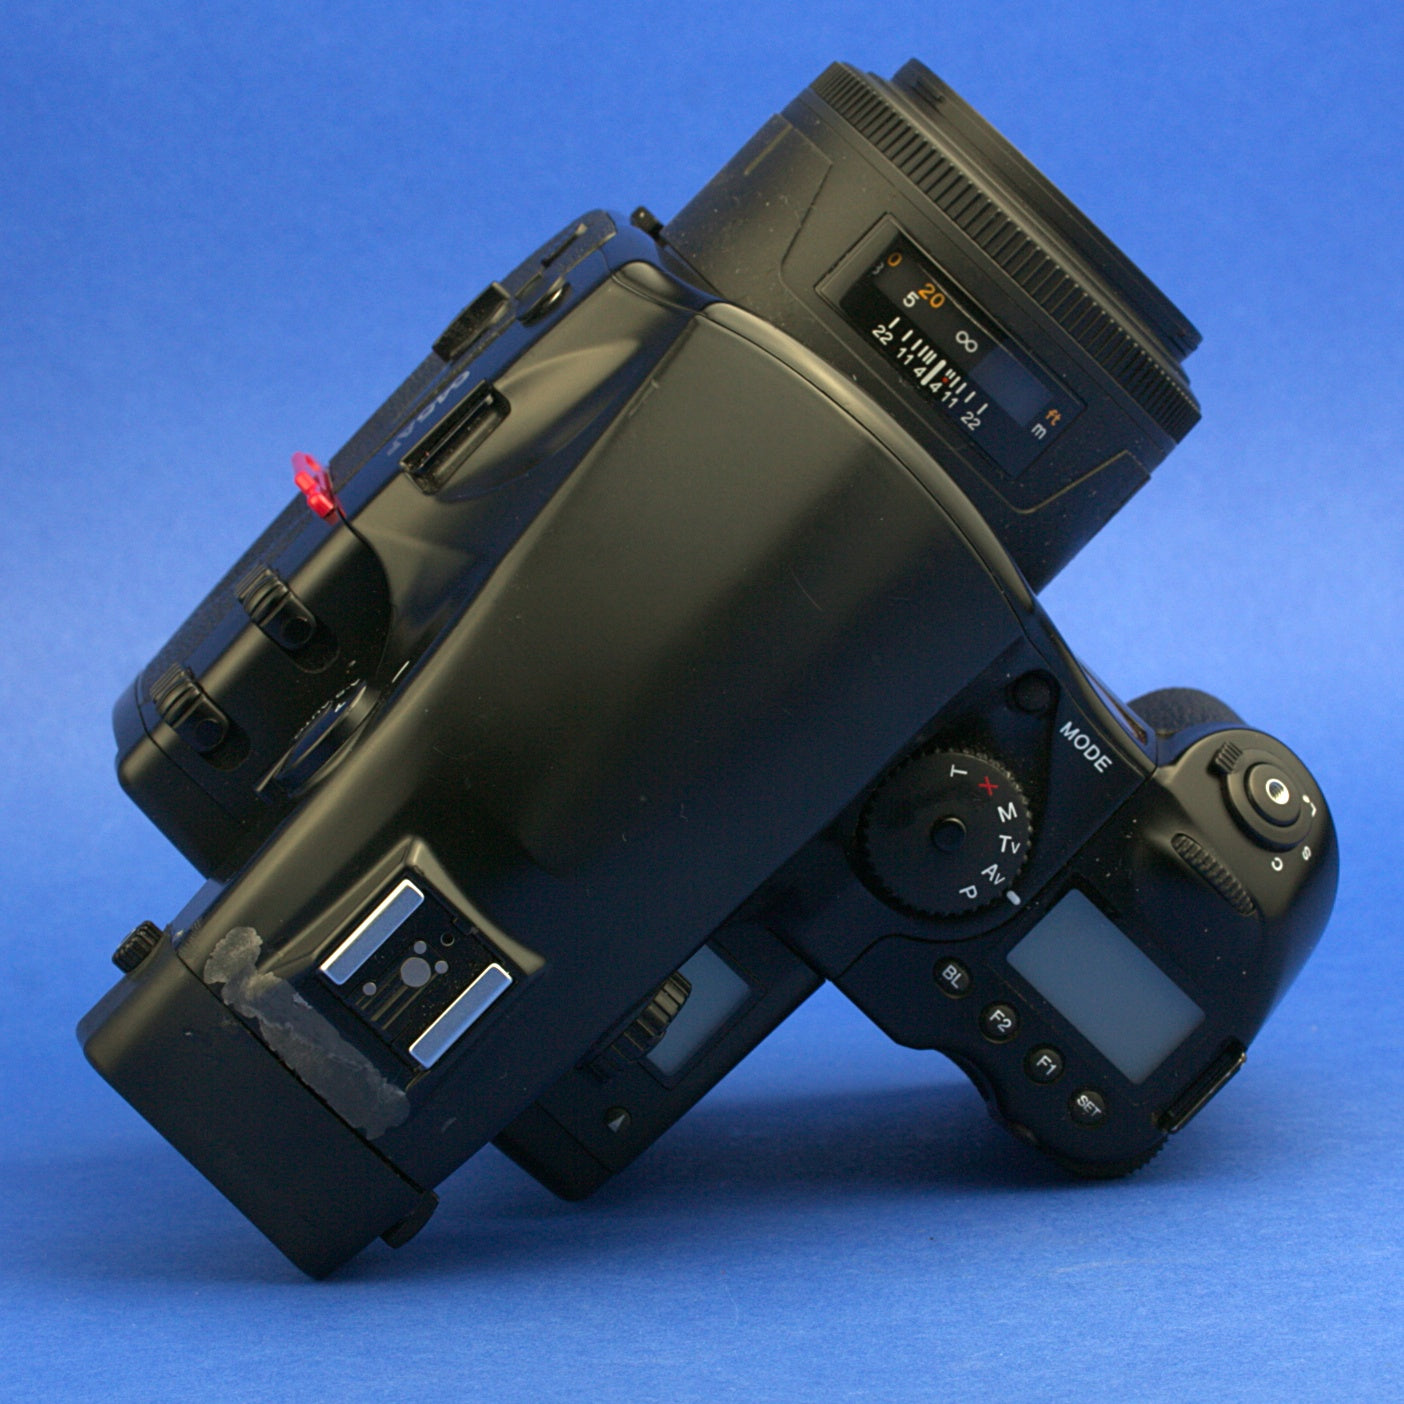 Mamiya 645 AF Medium Format Camera Kit Film Tested